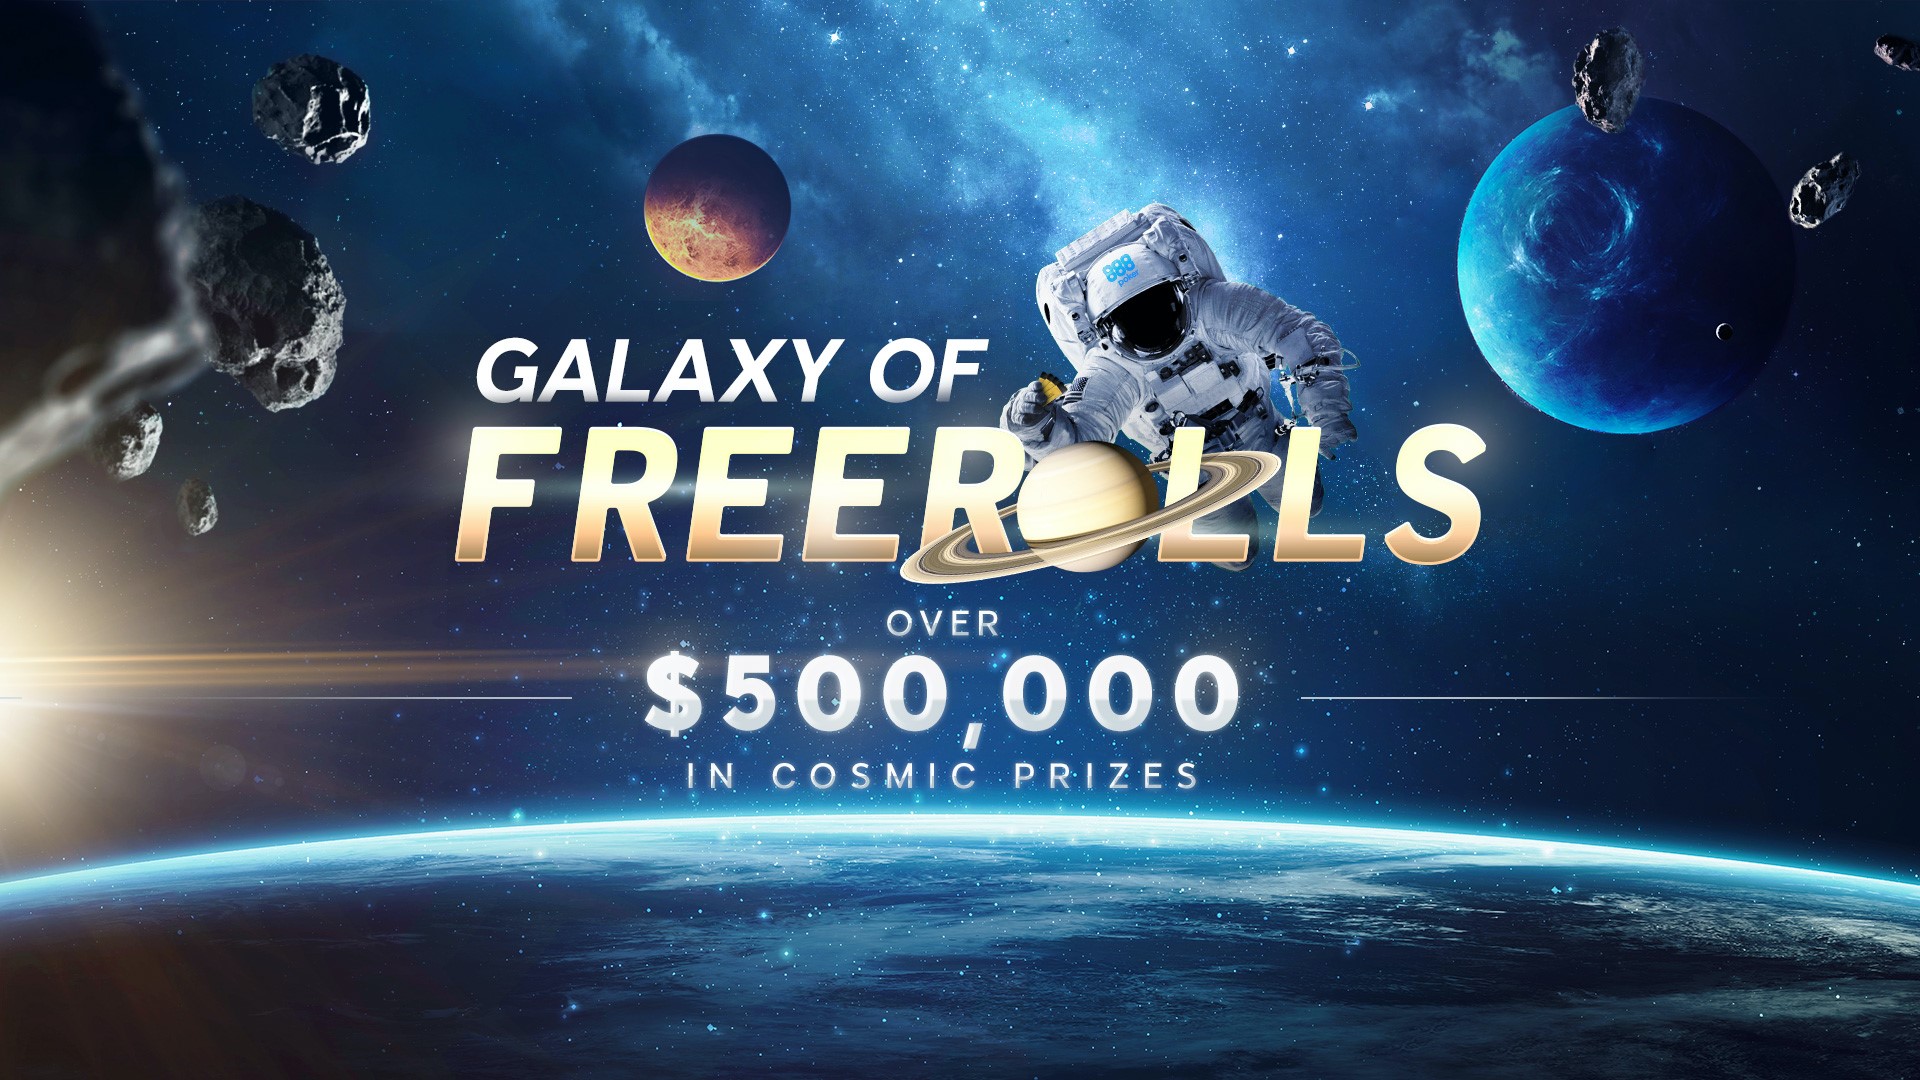 The Galaxy of Freerolls will run through June 7